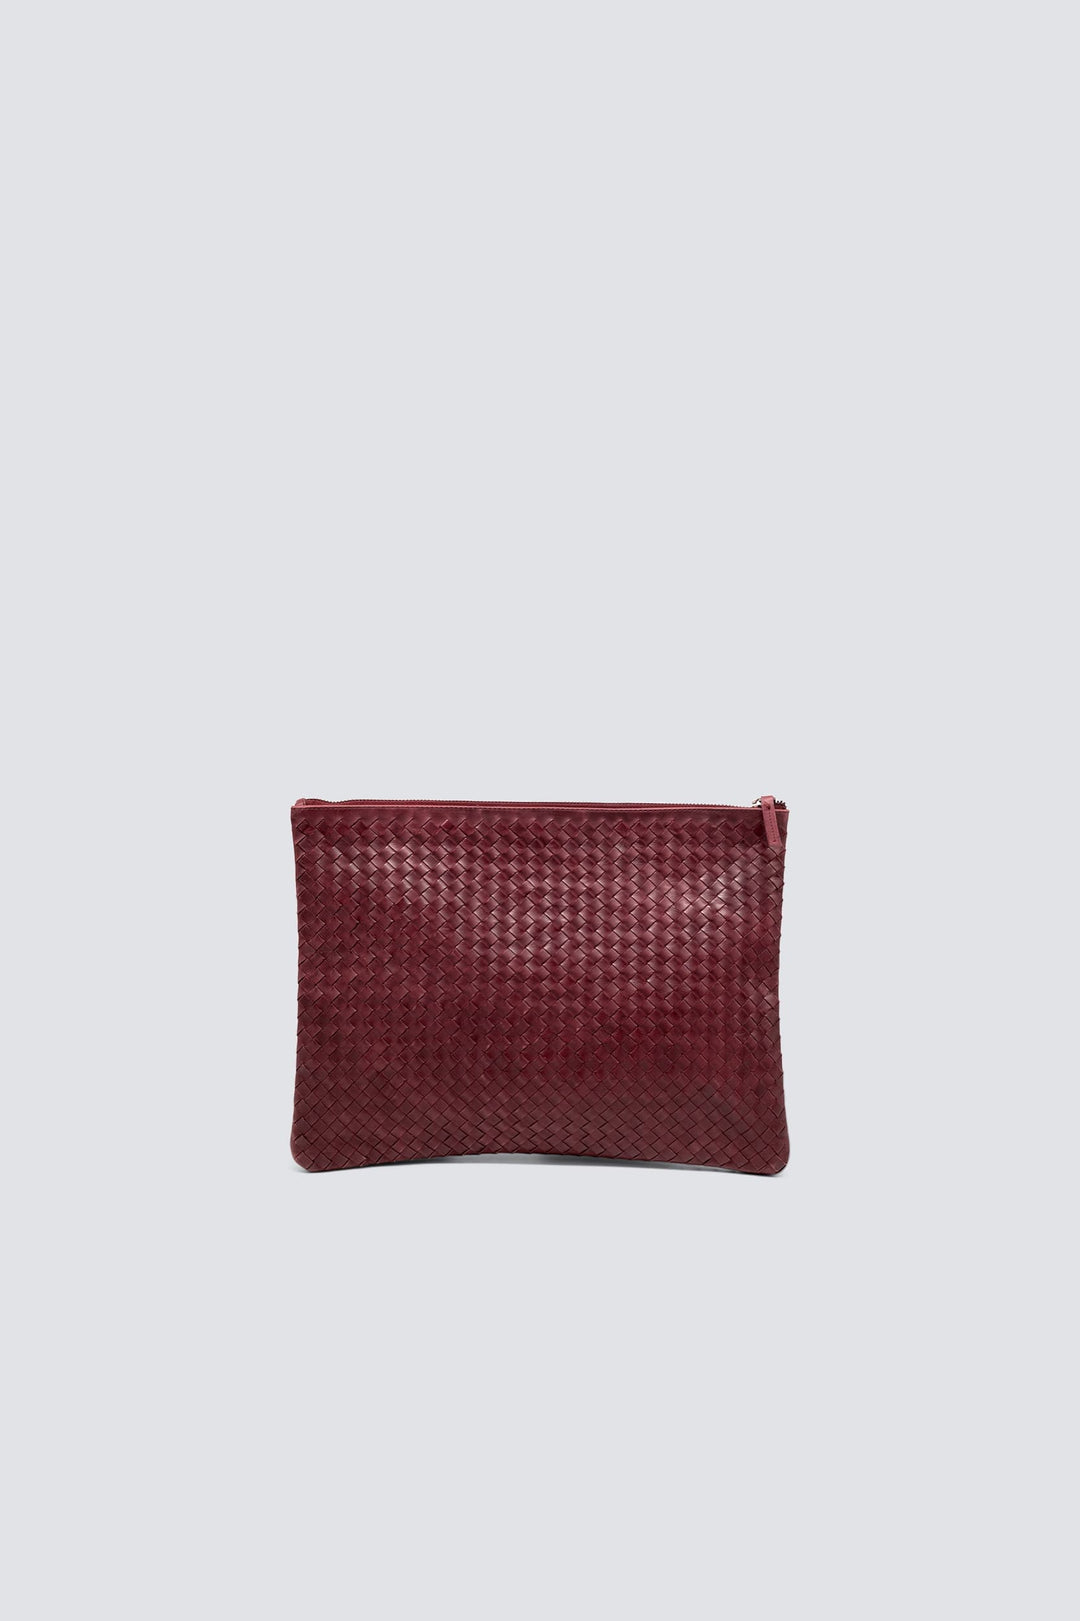 Dragon Diffusion woven leather bag handmade - A4 Pochette Bordeaux